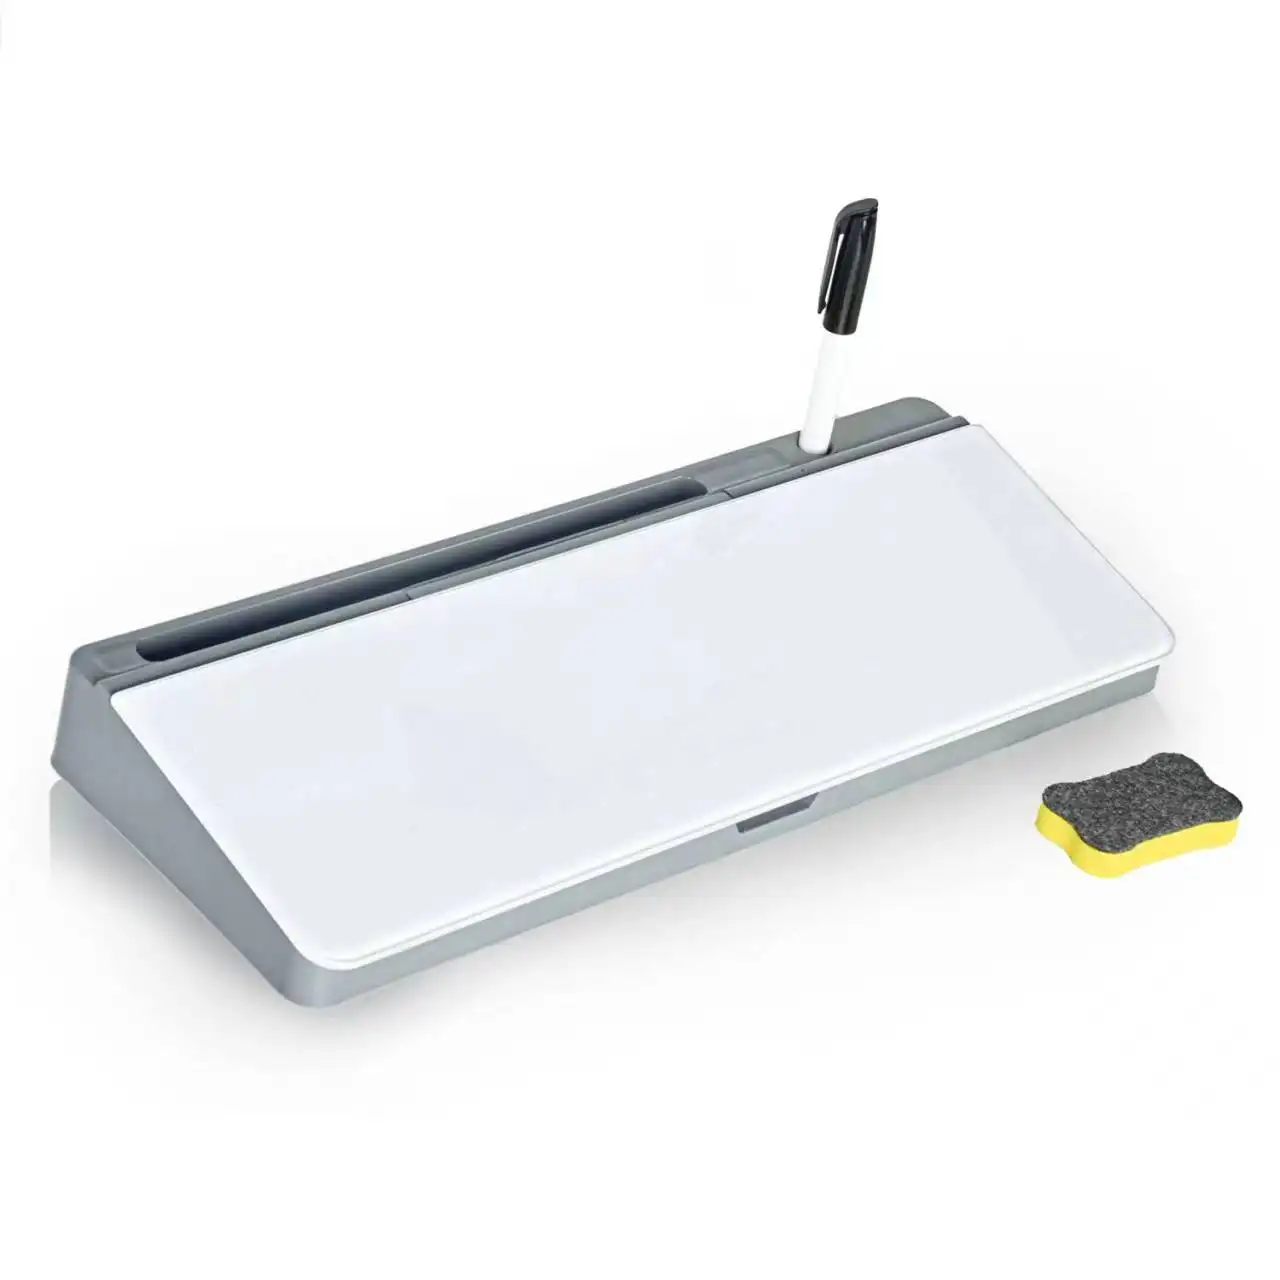 Tableau blanc de bureau en verre avec calculatrice de base